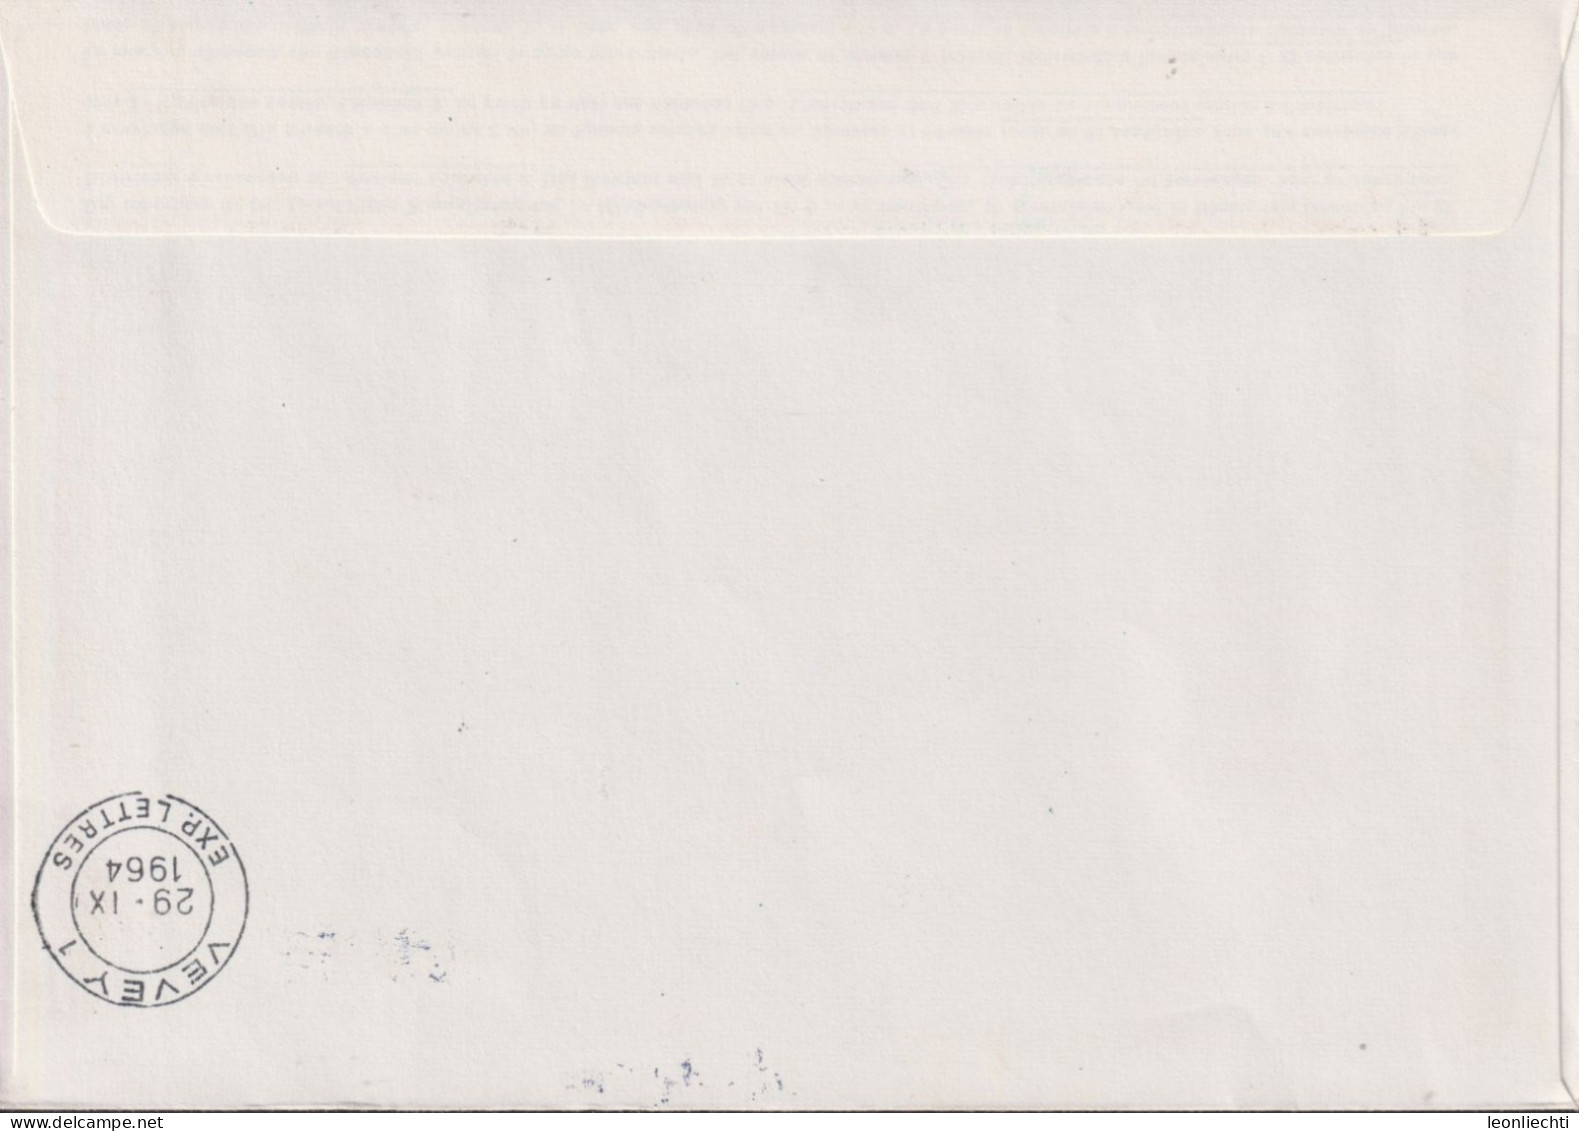 1964 Schweiz Brief ° Vol Postal Par Ballon Libre, Mehrfachfrankatur (Pro Juventute) - Mongolfiere